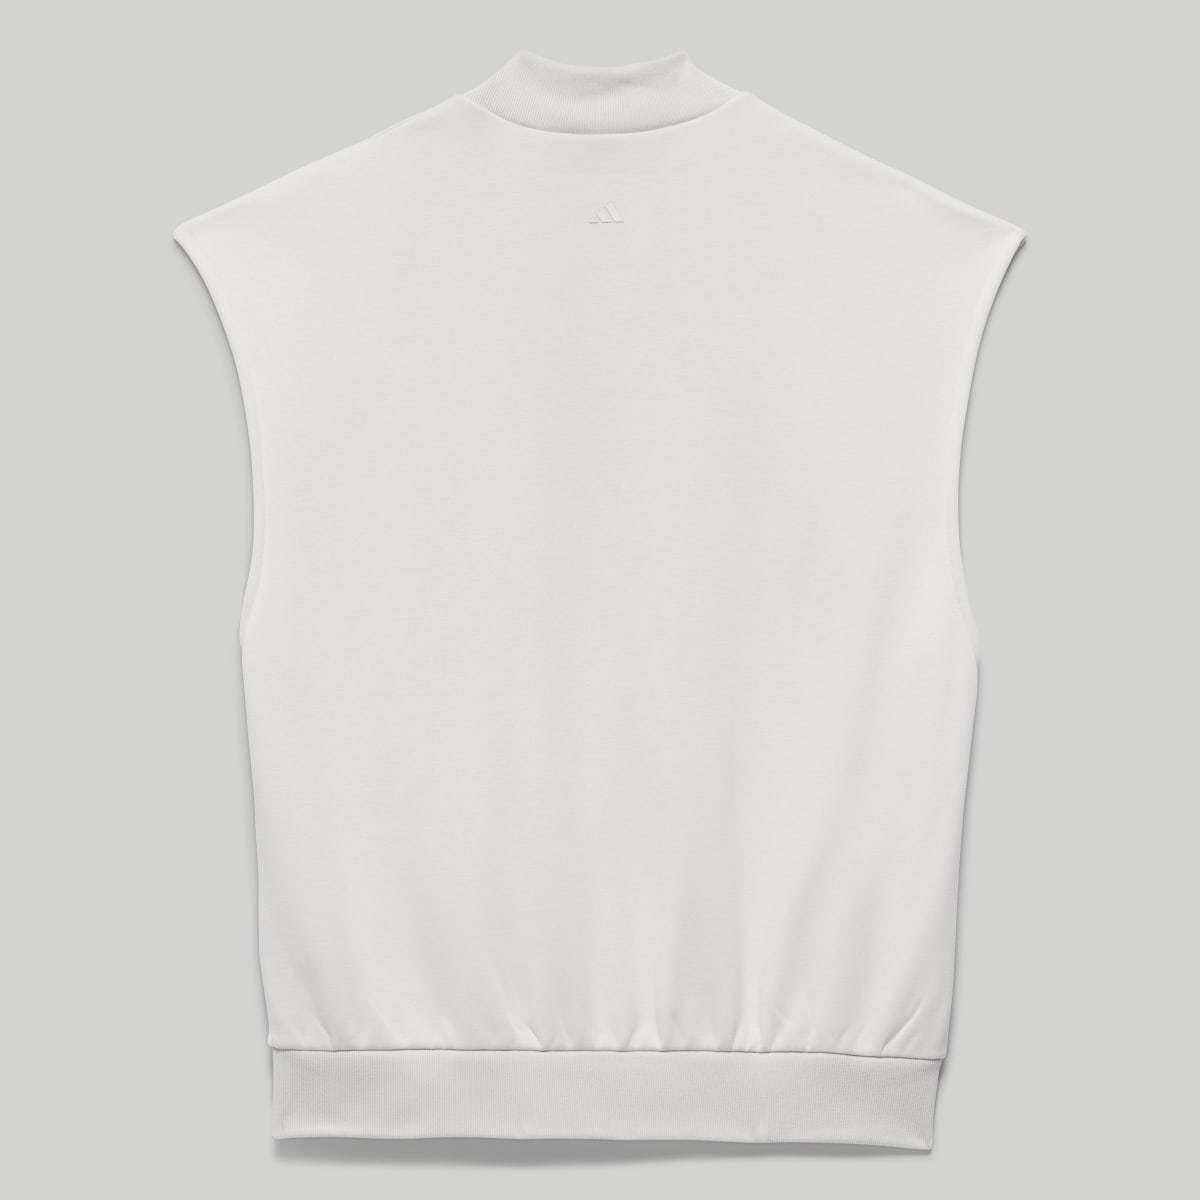 Adidas Basketball Sleeveless Sweatshirt. 4